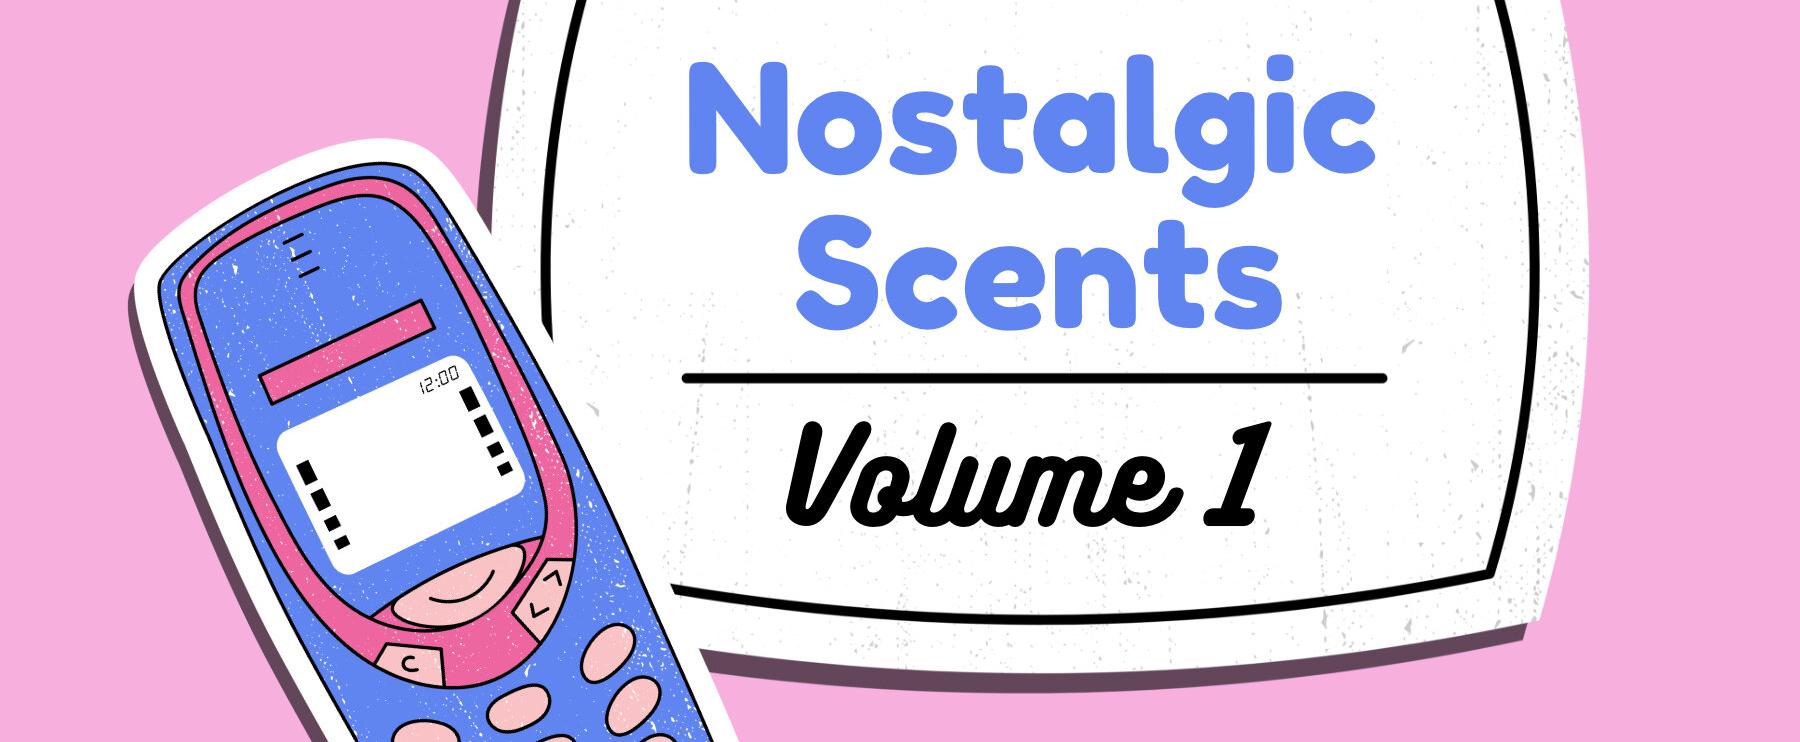 The Nostalgic Nose: Volume 1